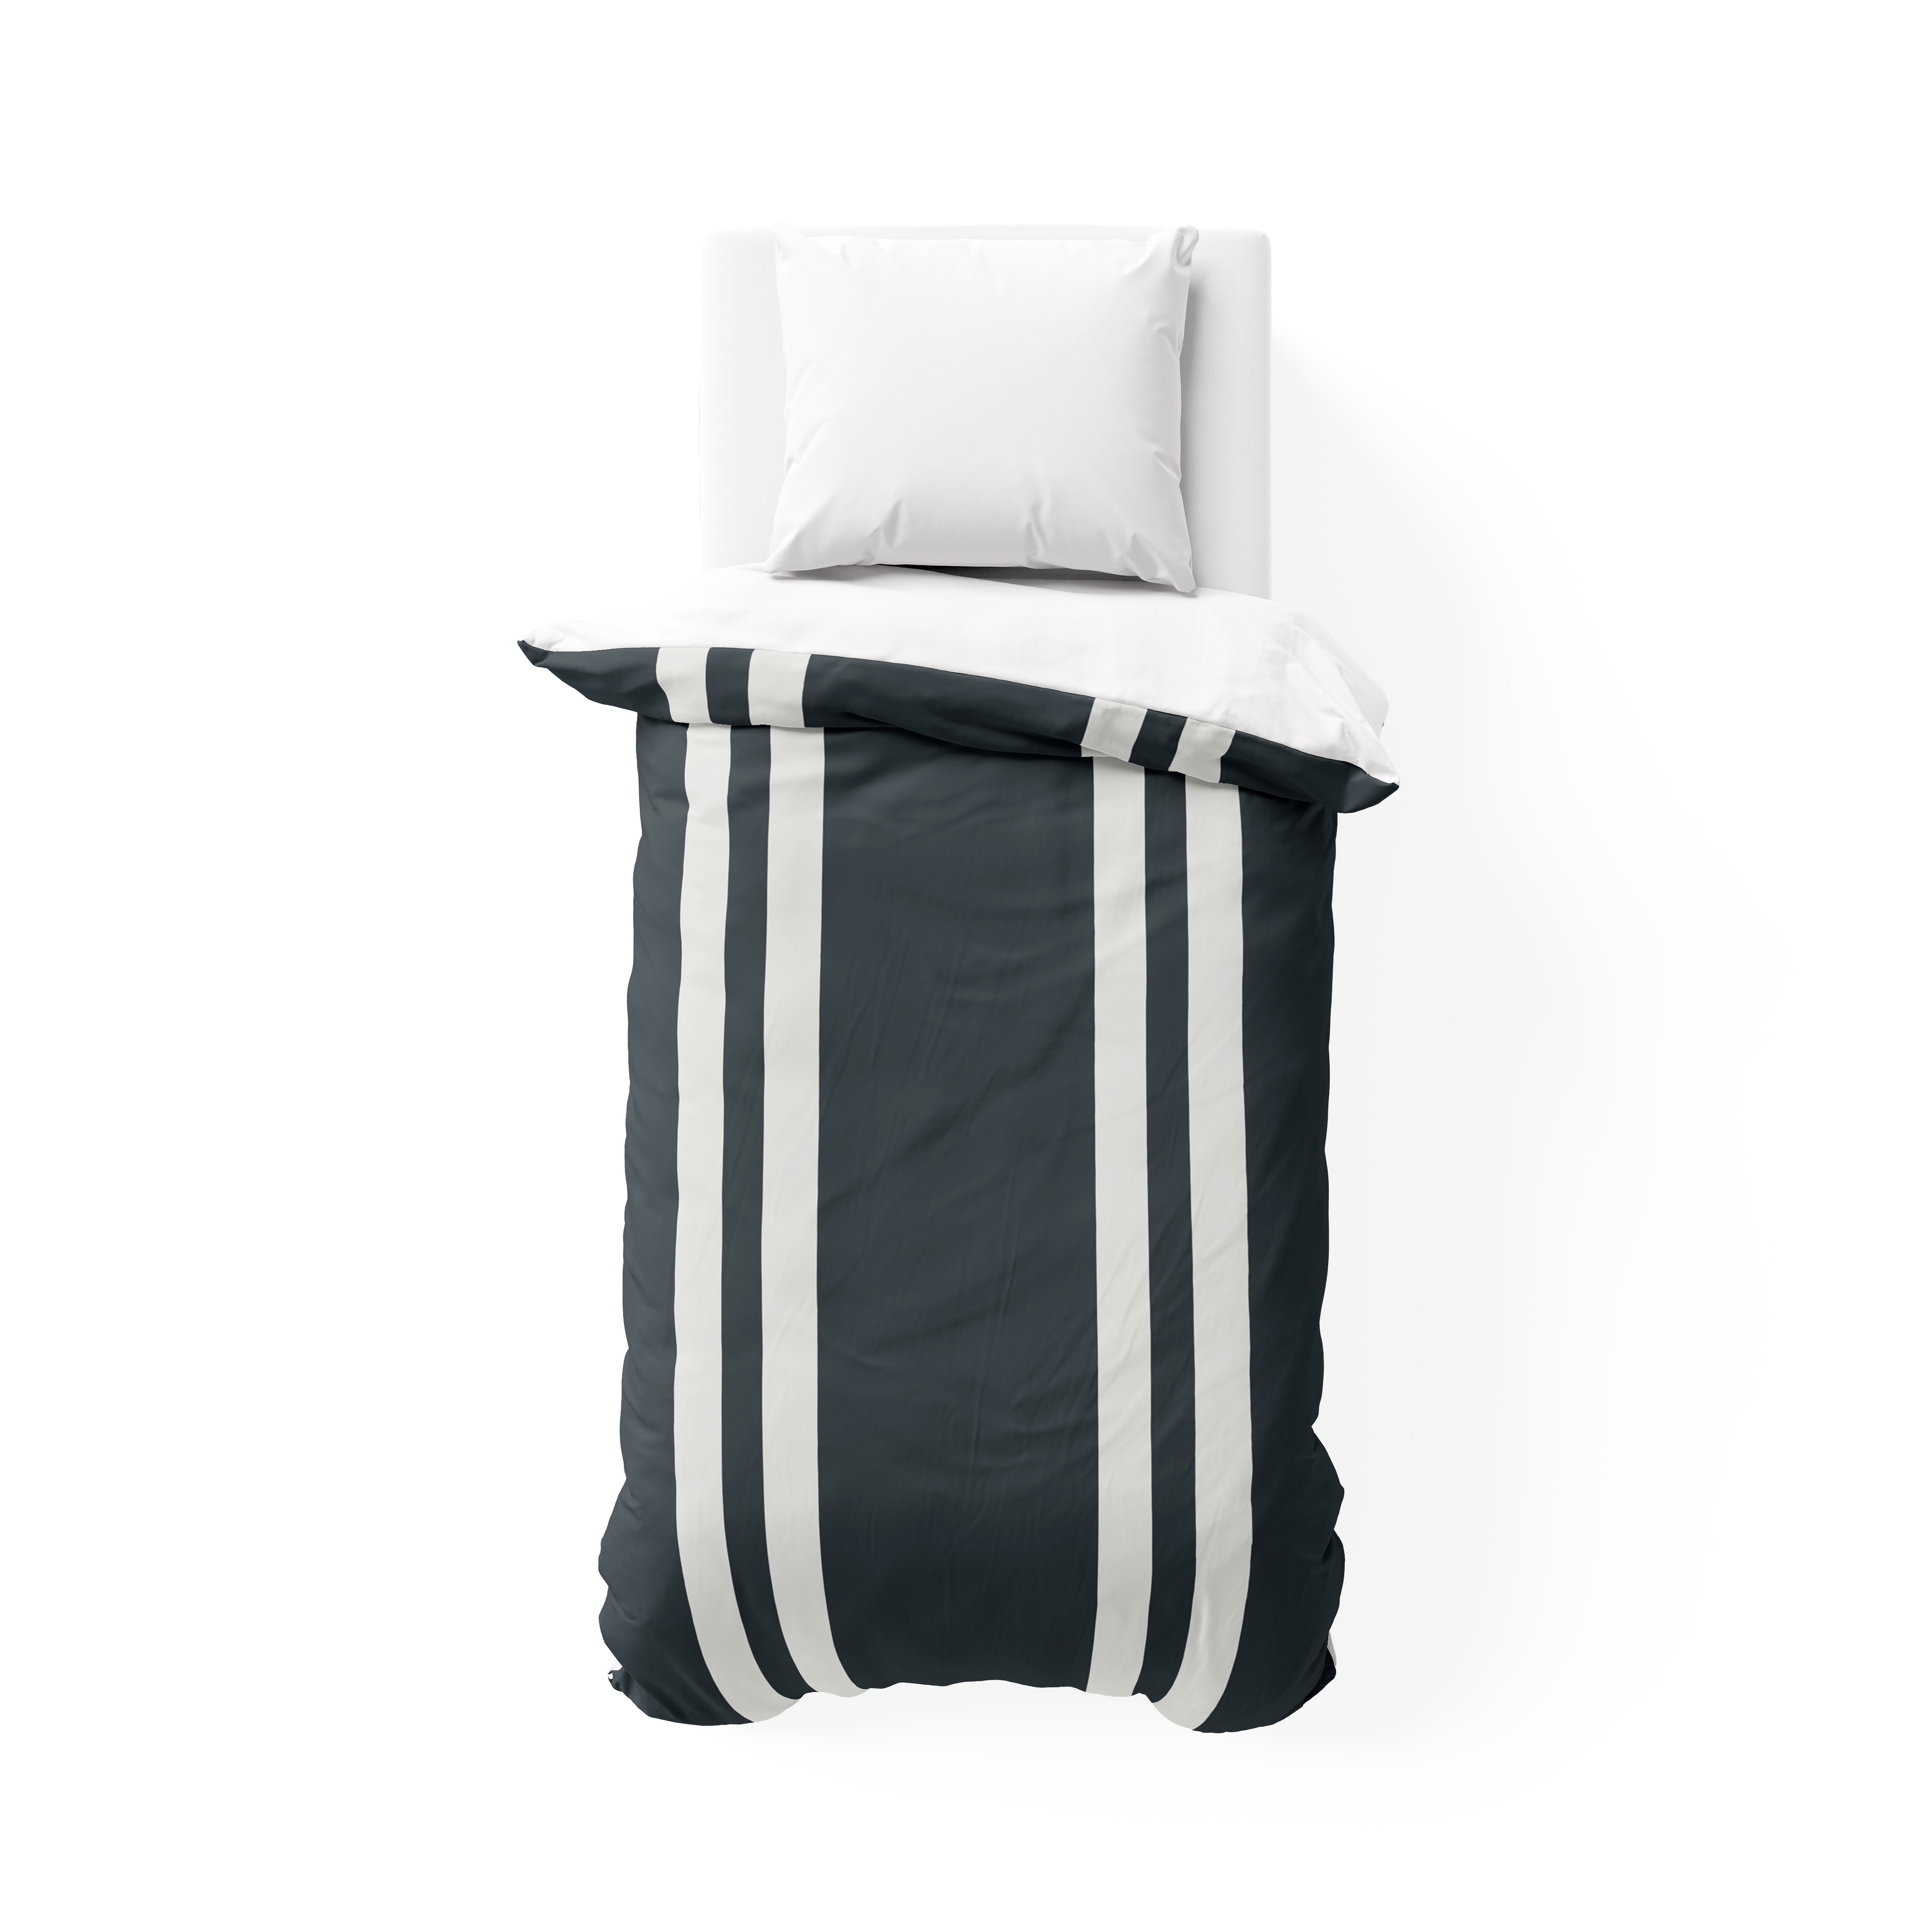 RYAN STRIPED NAVY College Dorm Comforter By Terri Ellis